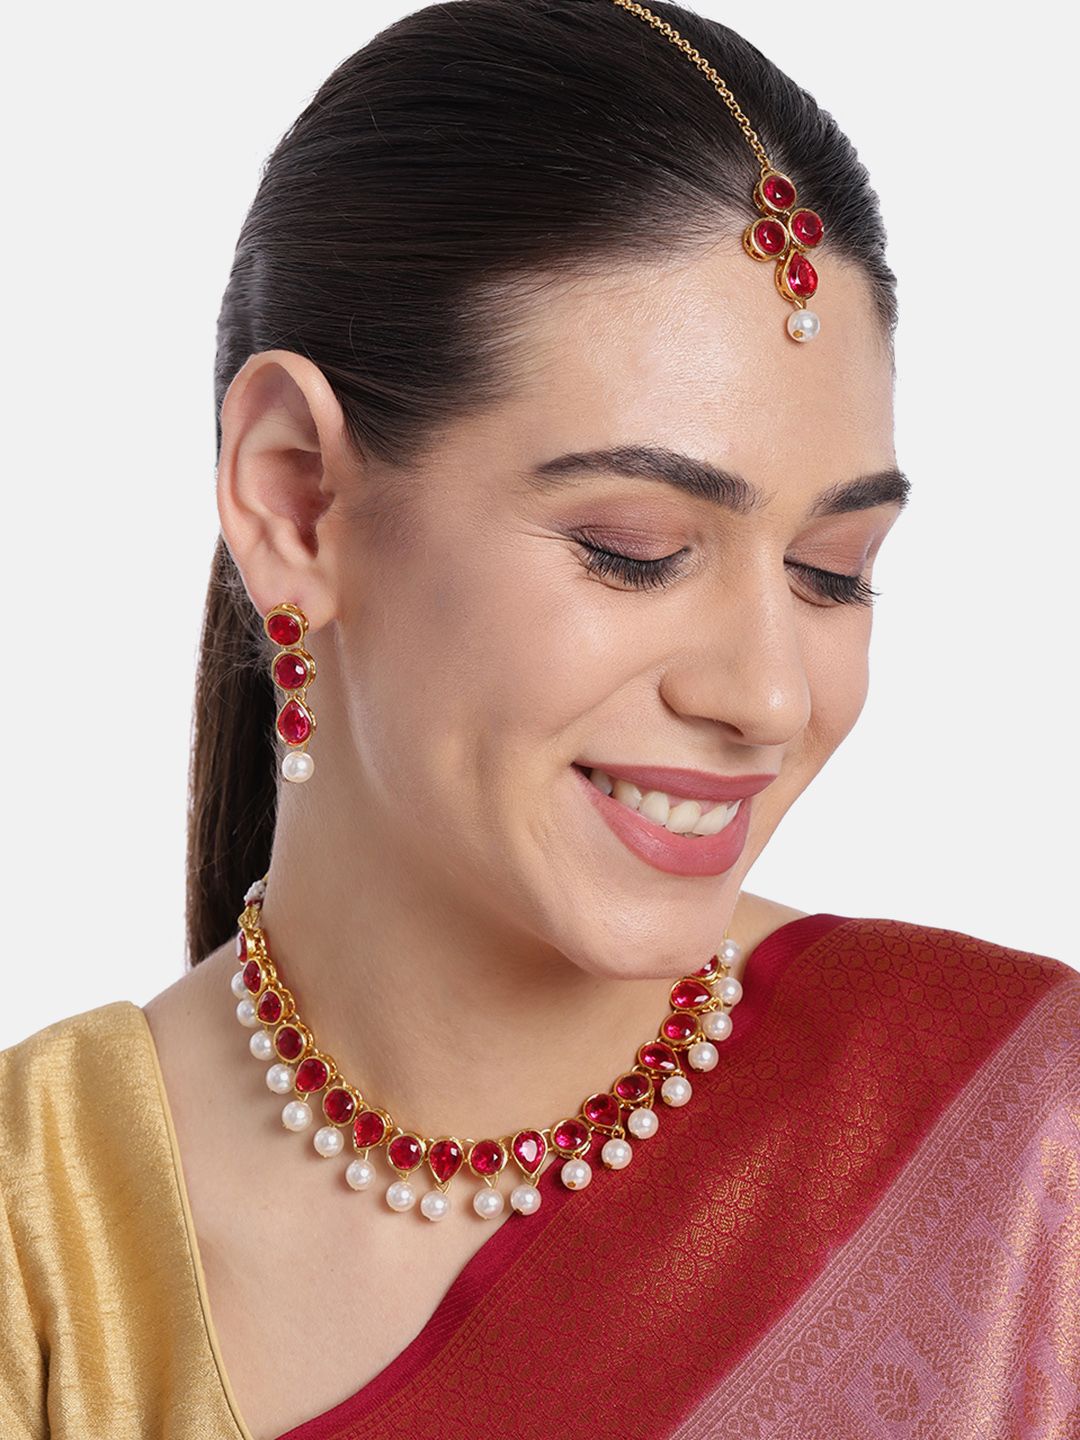 Sukkhi Pink Gold Plated Kundan & Pearl Choker Necklace Set For Women 